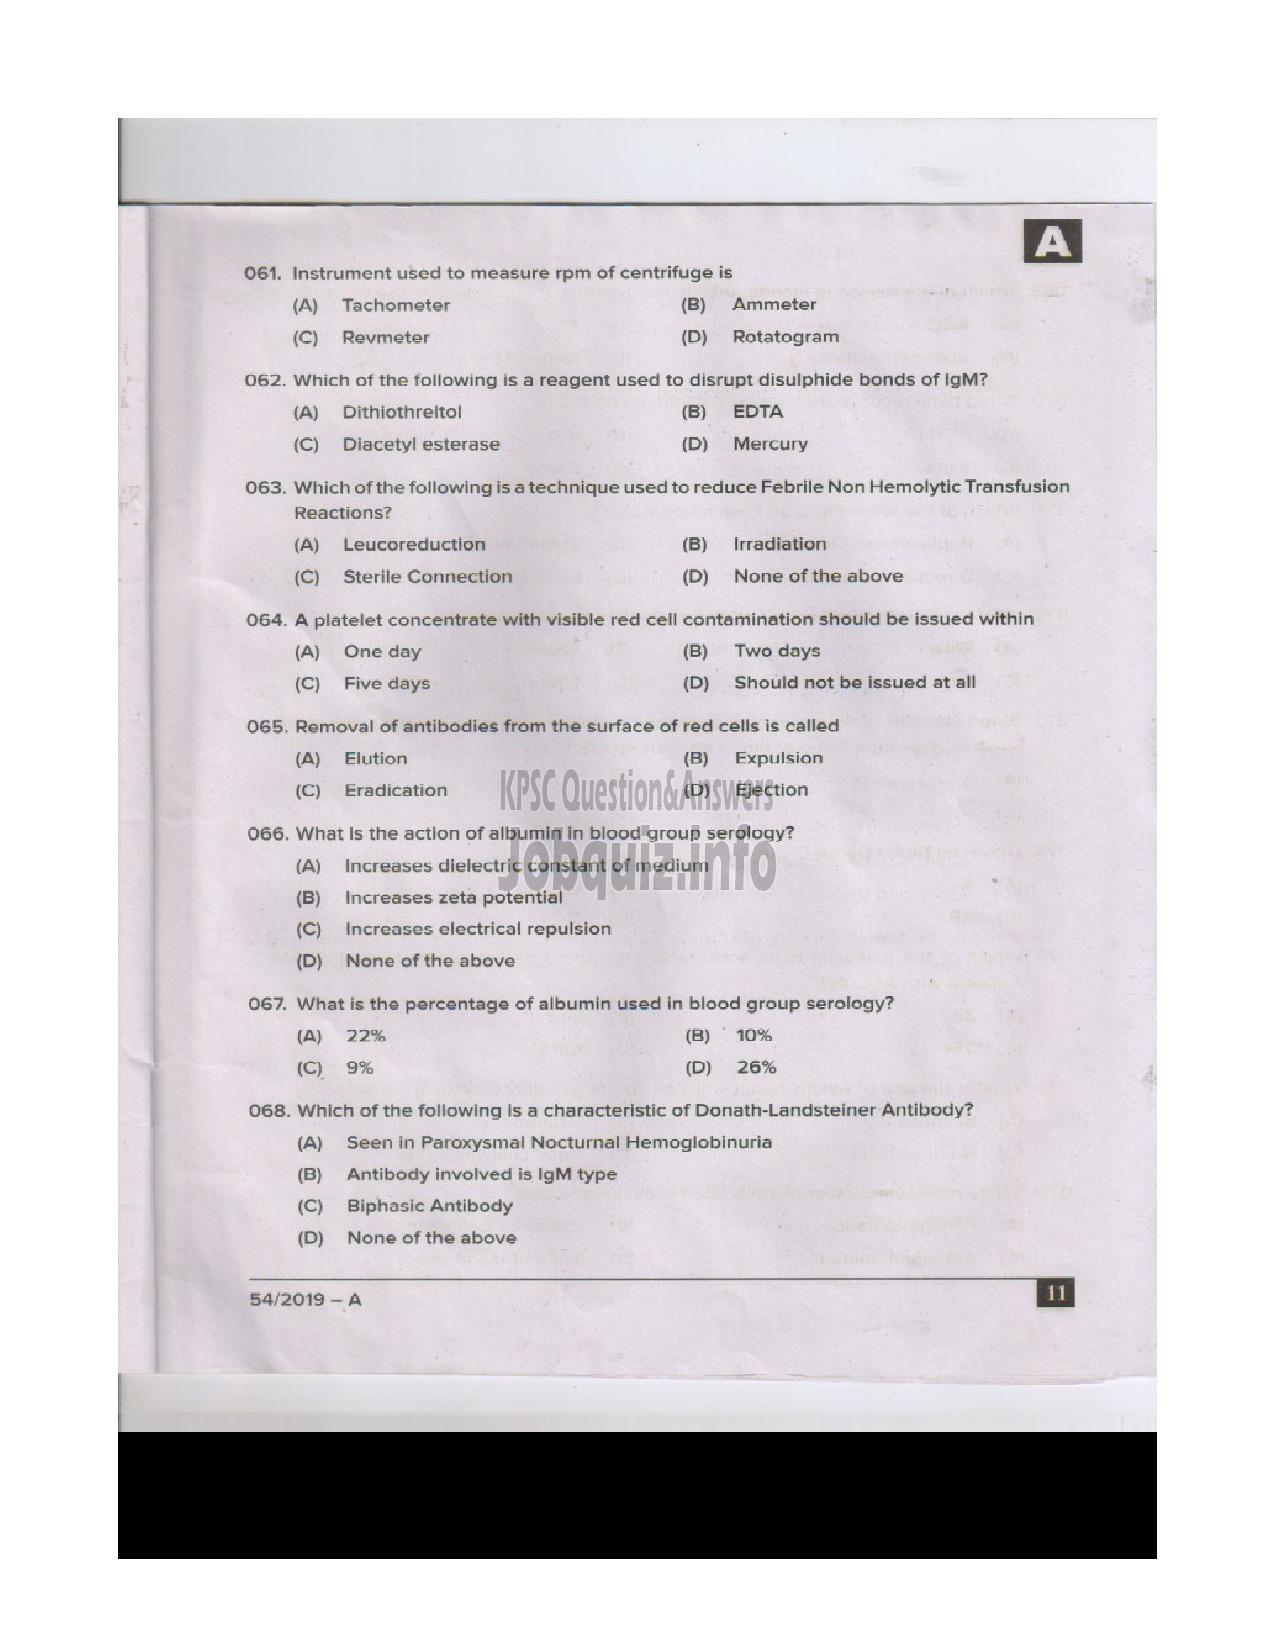 Kerala PSC Question Paper - BLOOD BANK TECHNICIAN HEALTH SERVICES ENGLISH -11